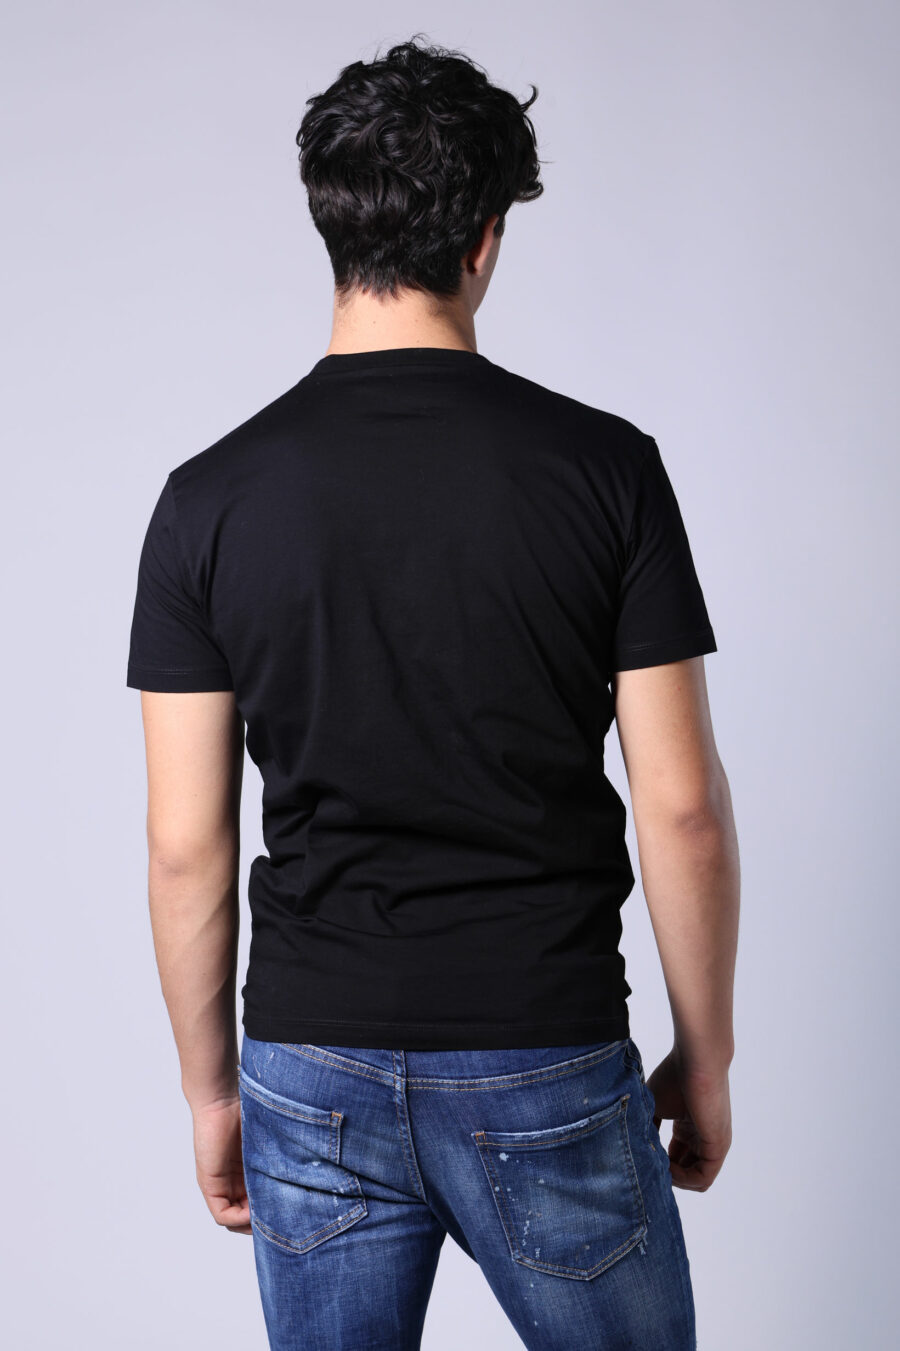 Camiseta negra con maxilogo "university" blanco - Untitled Catalog 05241